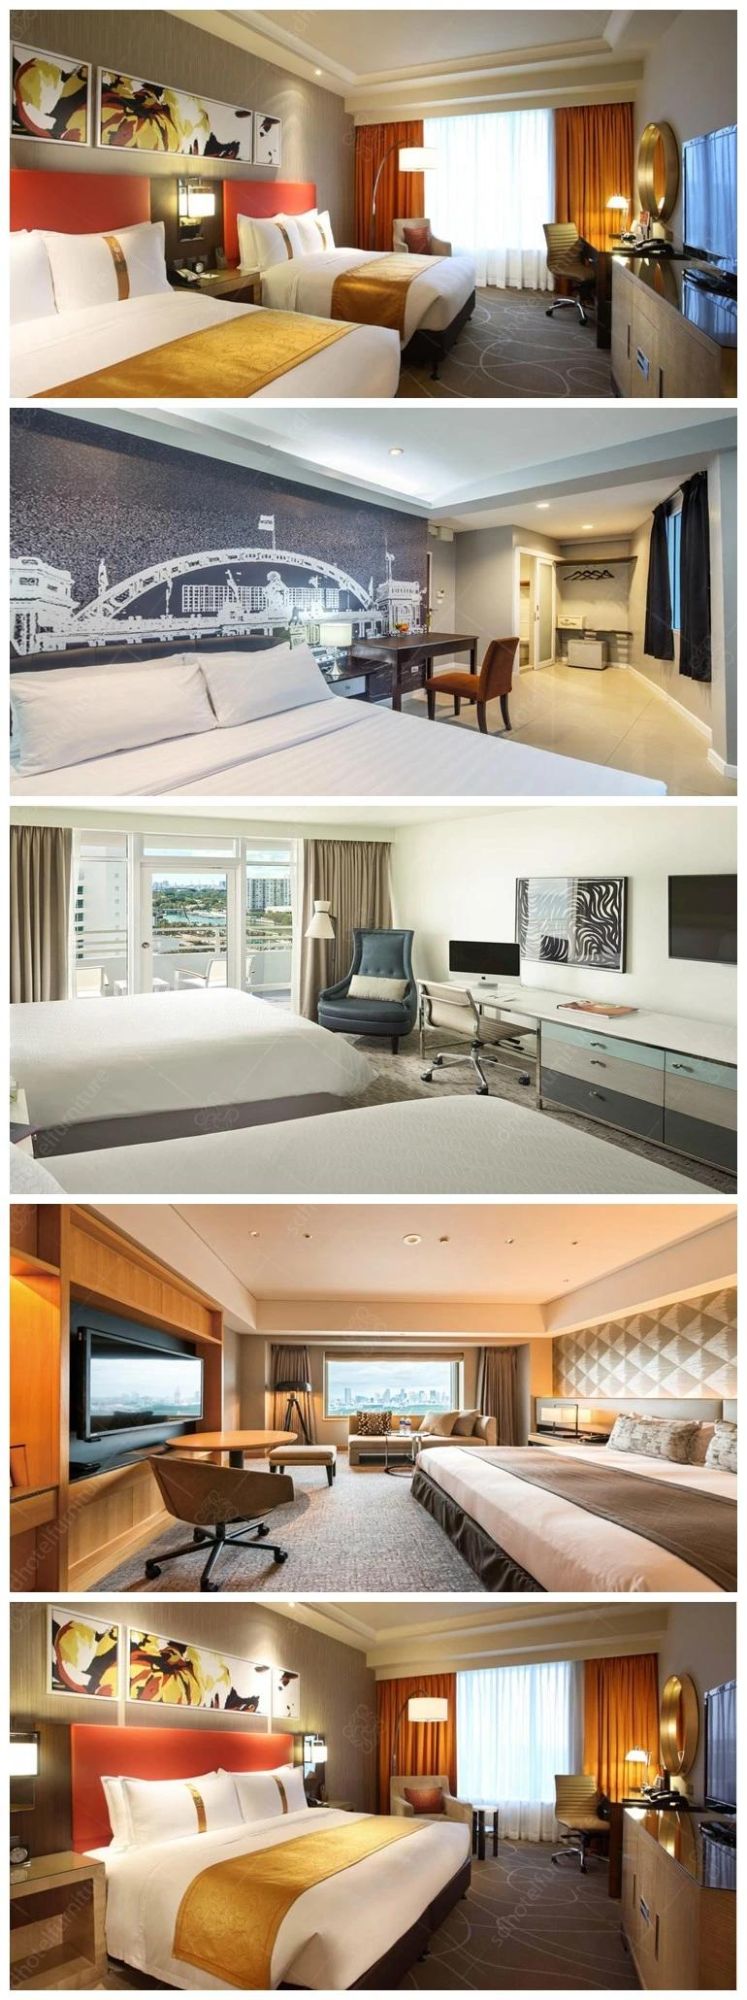 Discount Single Bed Dubai Elegant Bedroom Furniture Shangdian Hotel Furnture SD1153